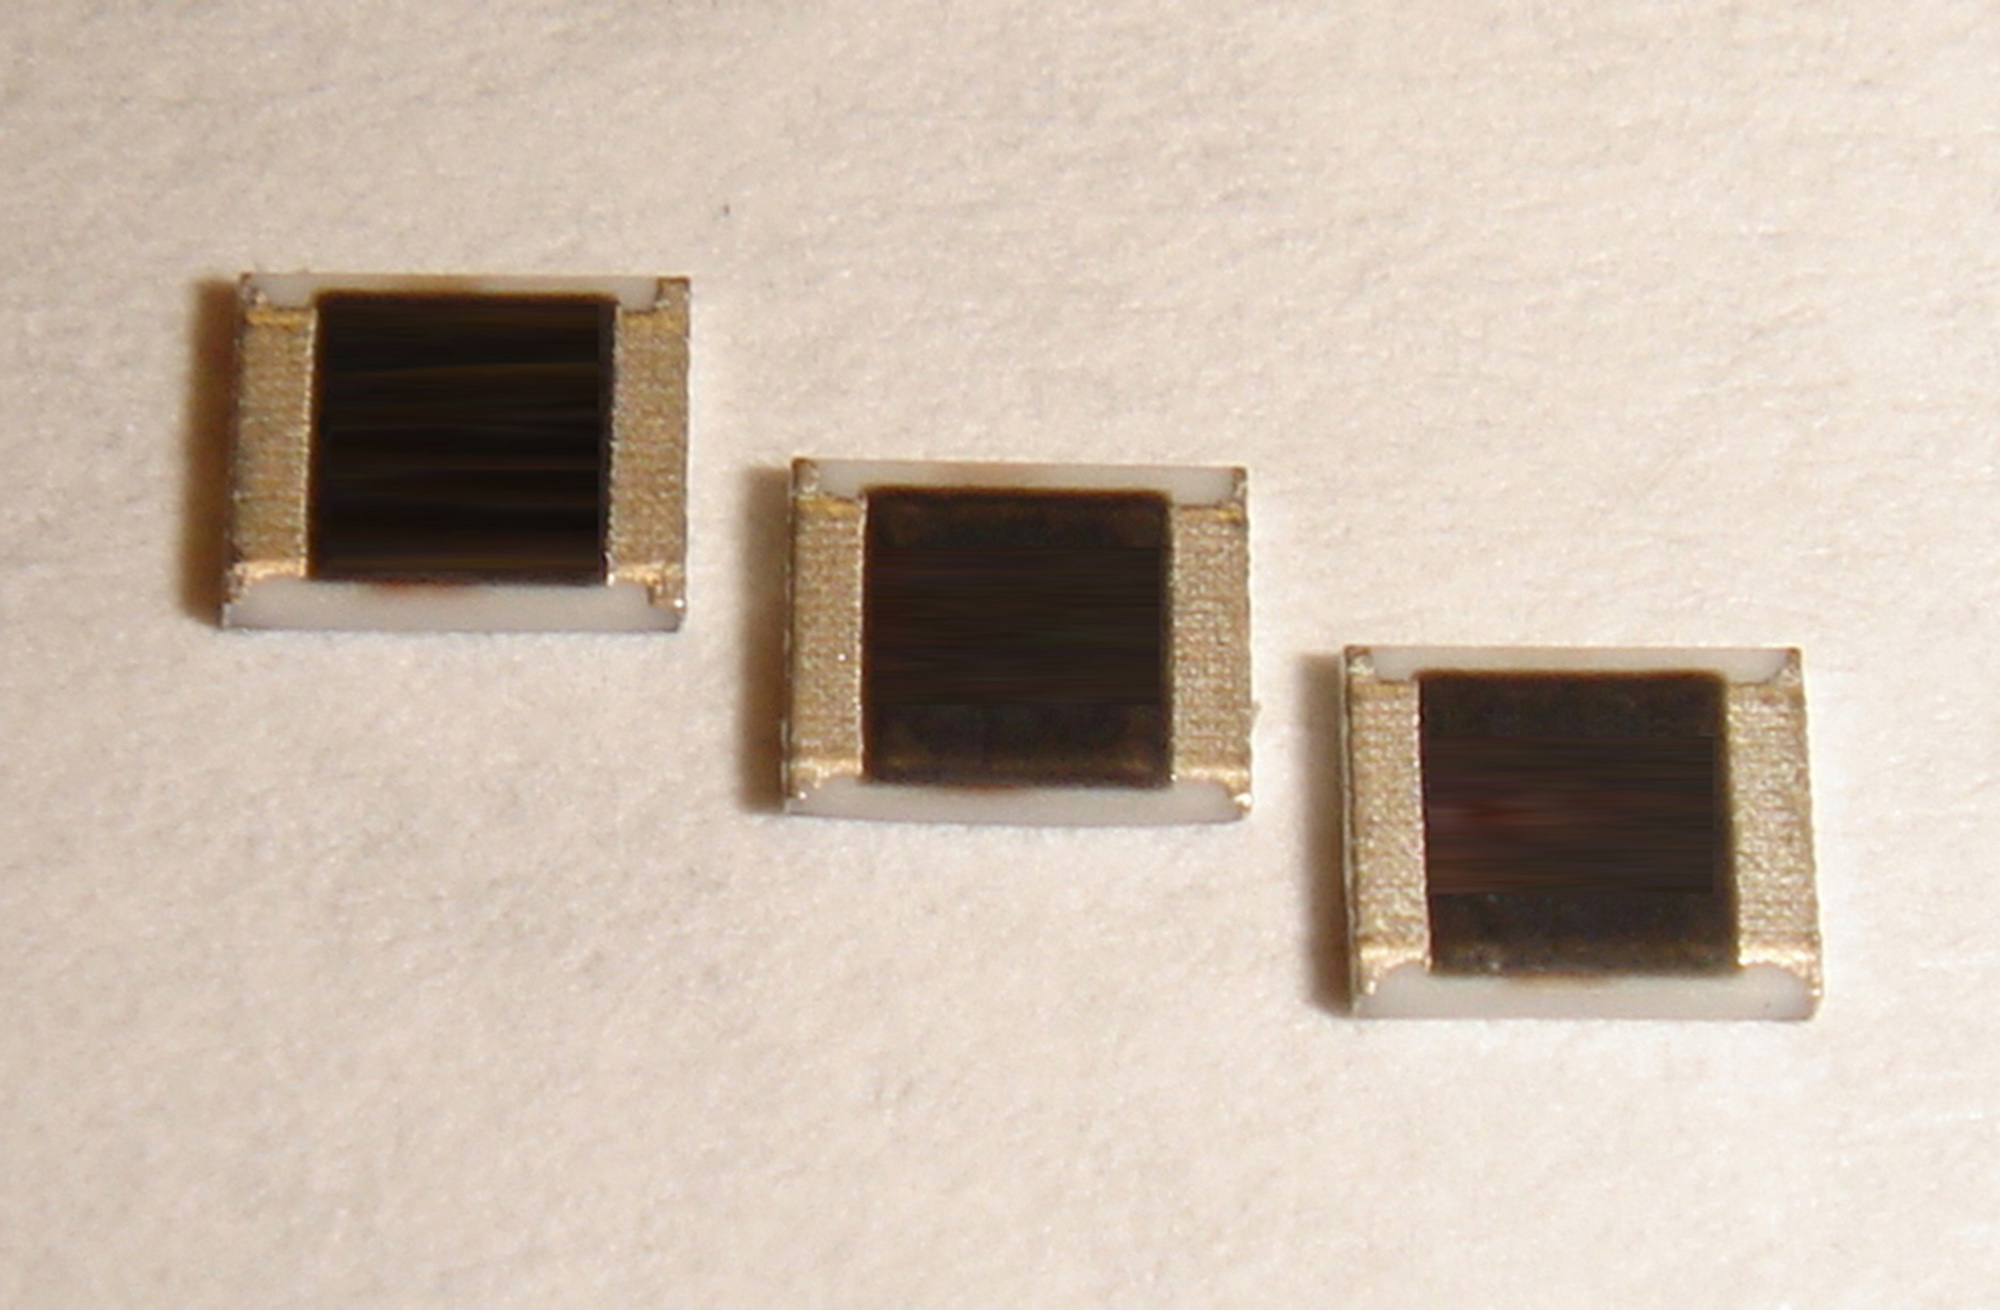 Current Sense Chip Resistors Offer Resistance to 10 ohm